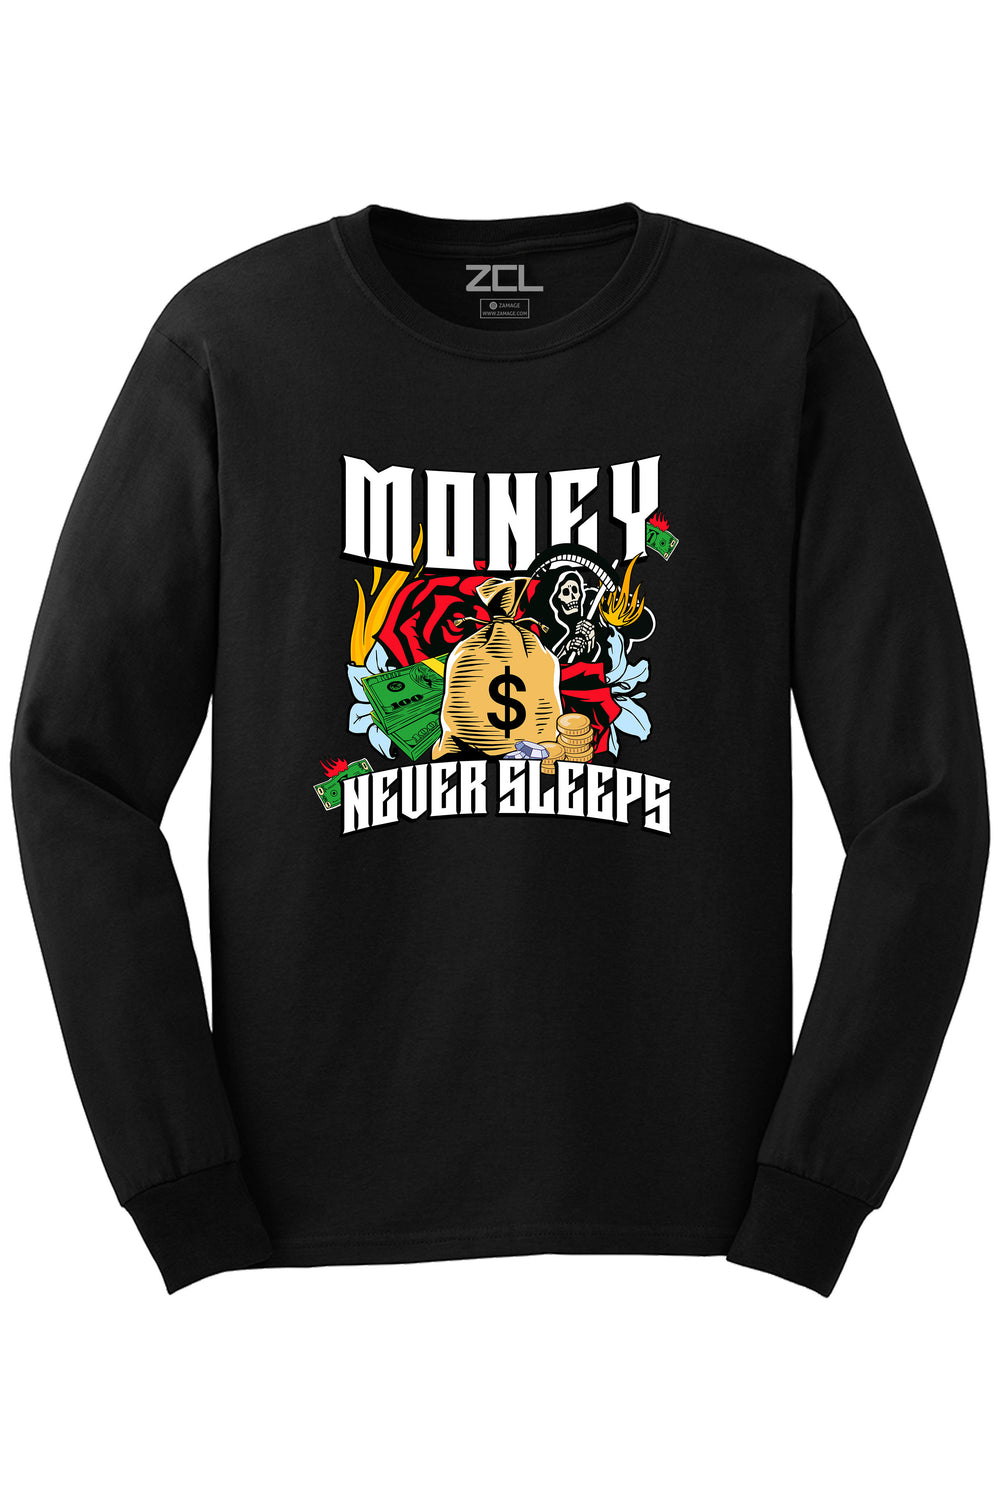 Money Never Sleeps Long Sleeve Tee (Multi Color Logo) - Zamage